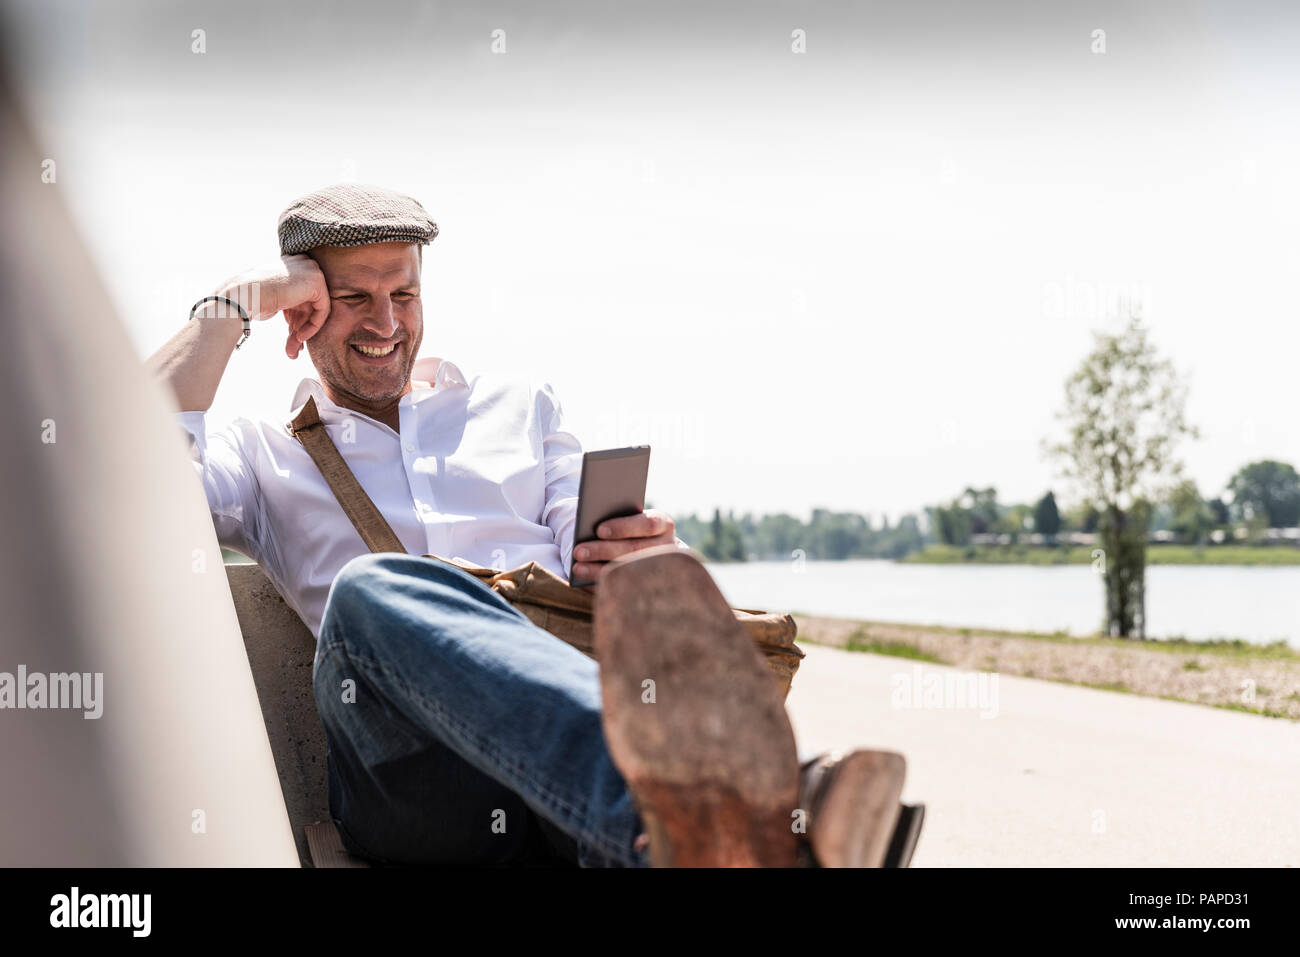 Mature man using smartphone on bench Stock Photo